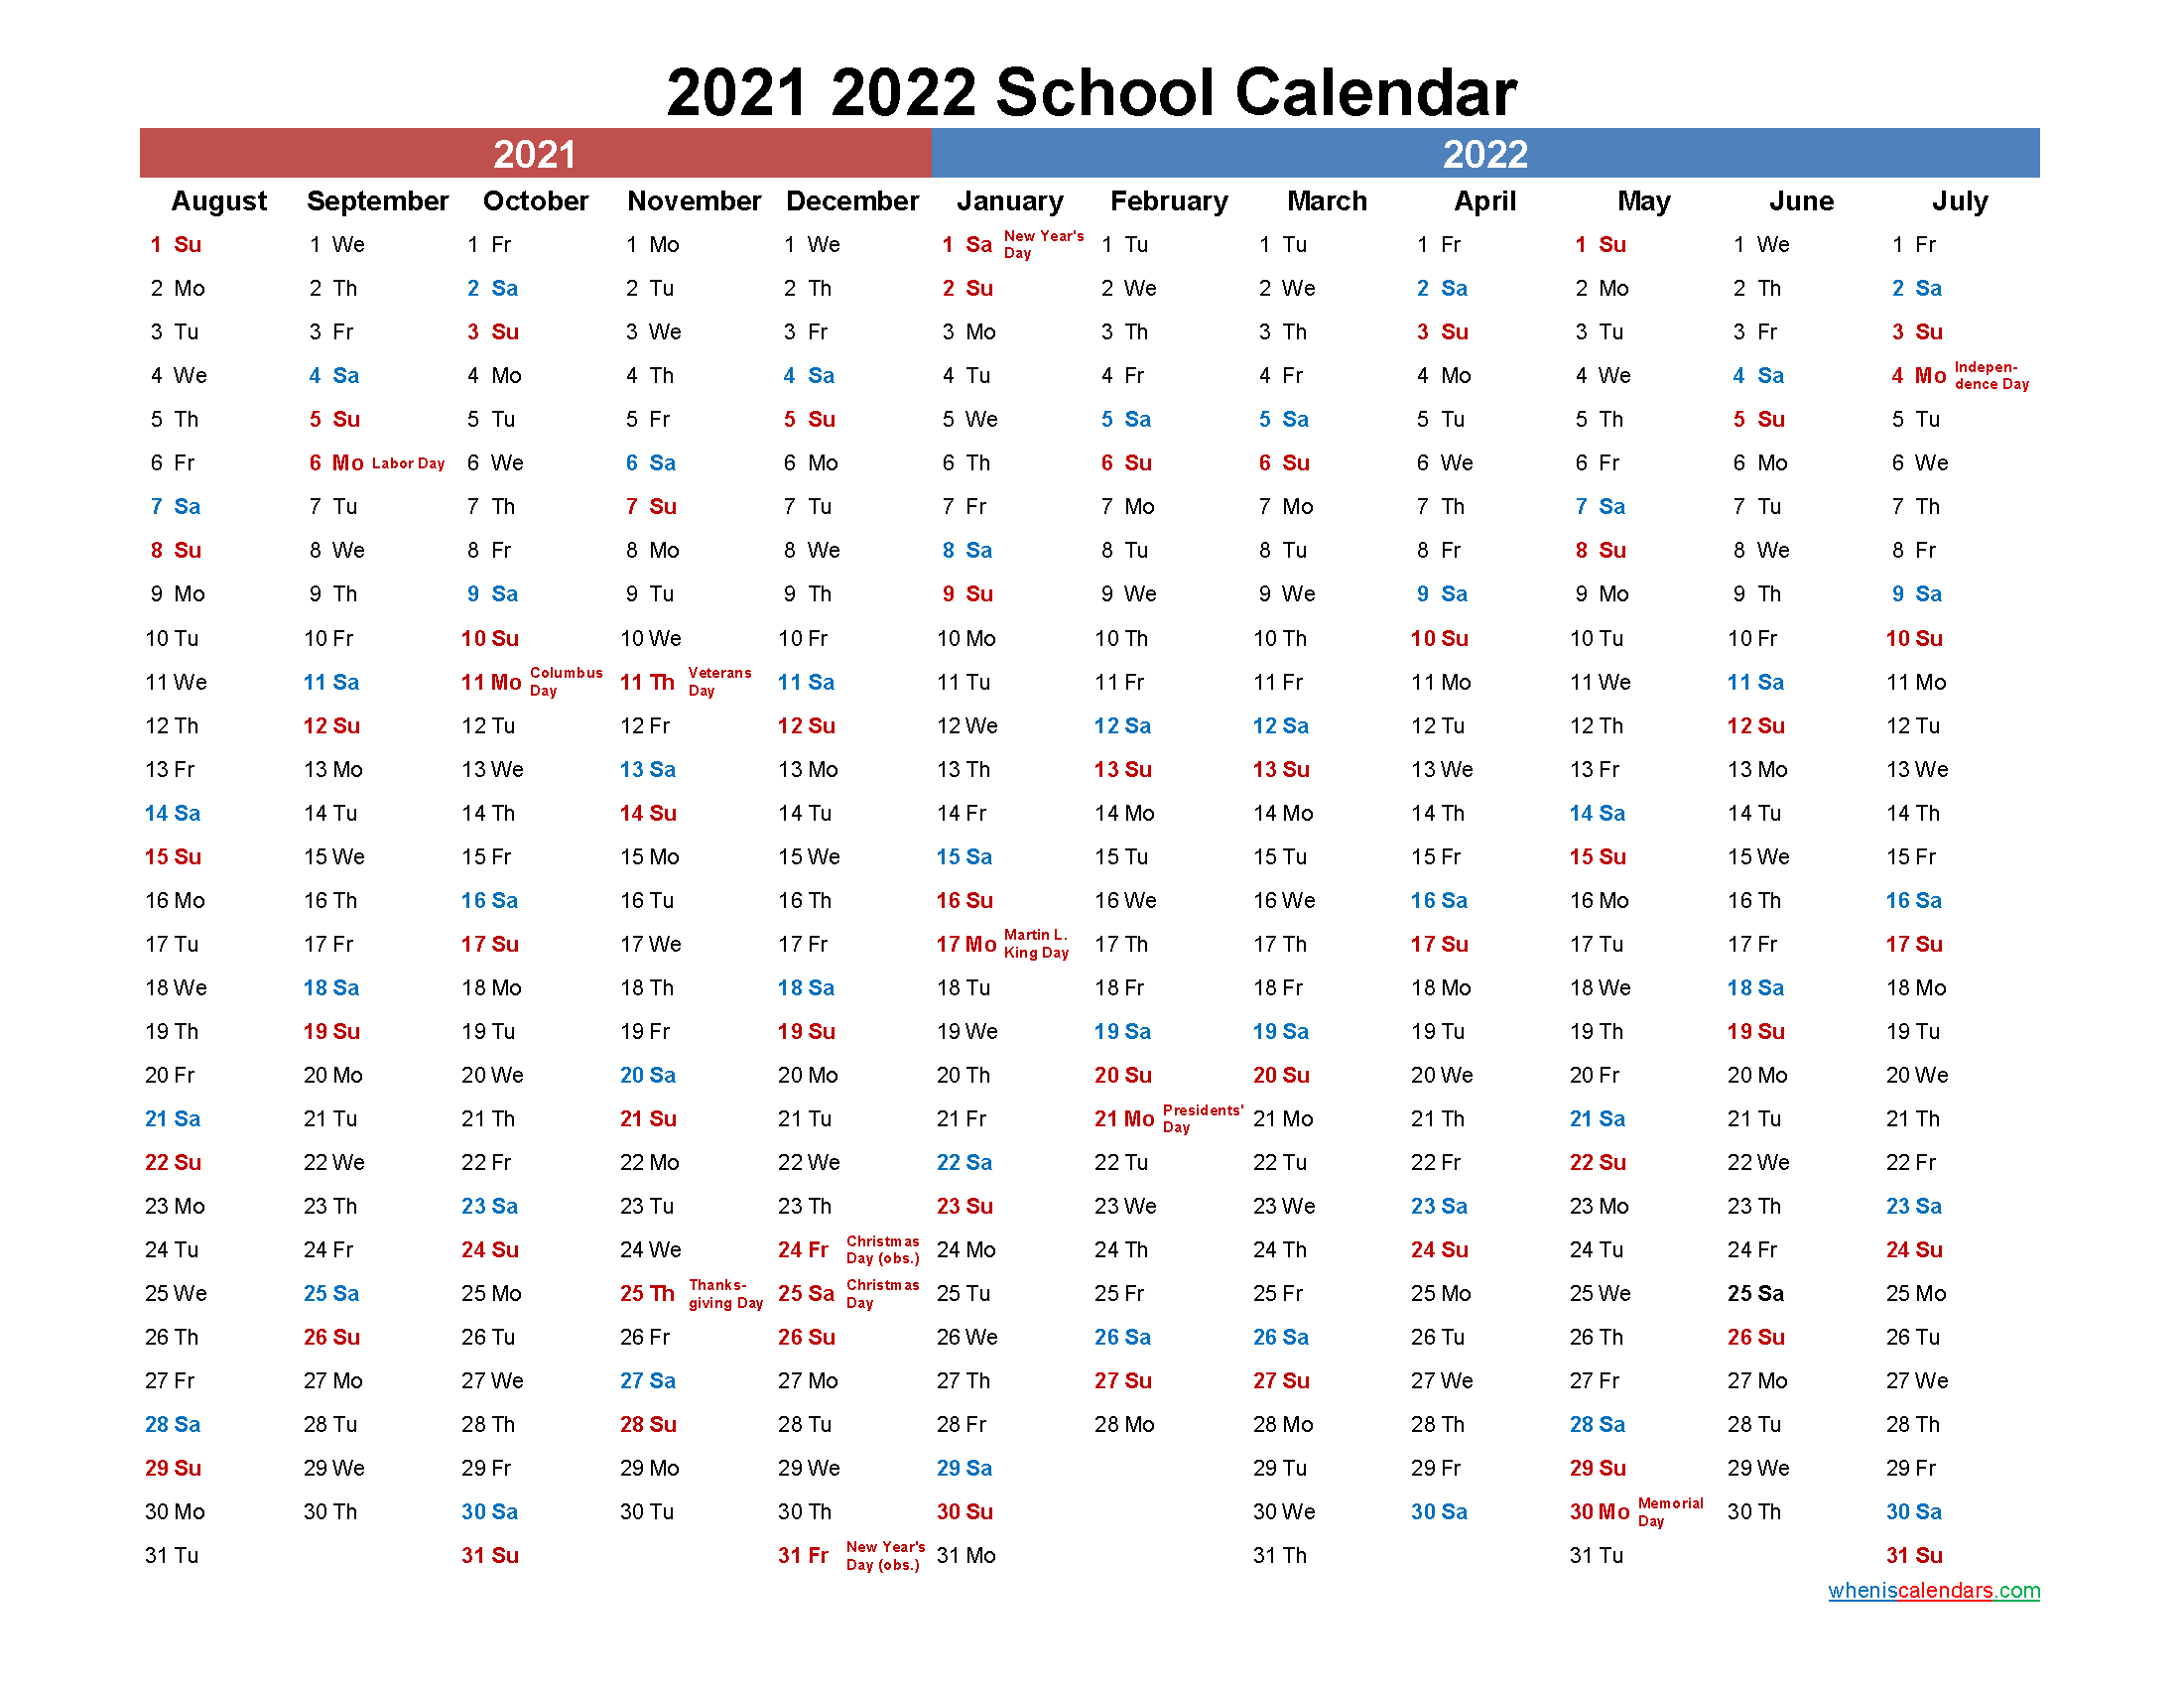 2021 and 2022 School Calendar Printable - Template No.22scl29